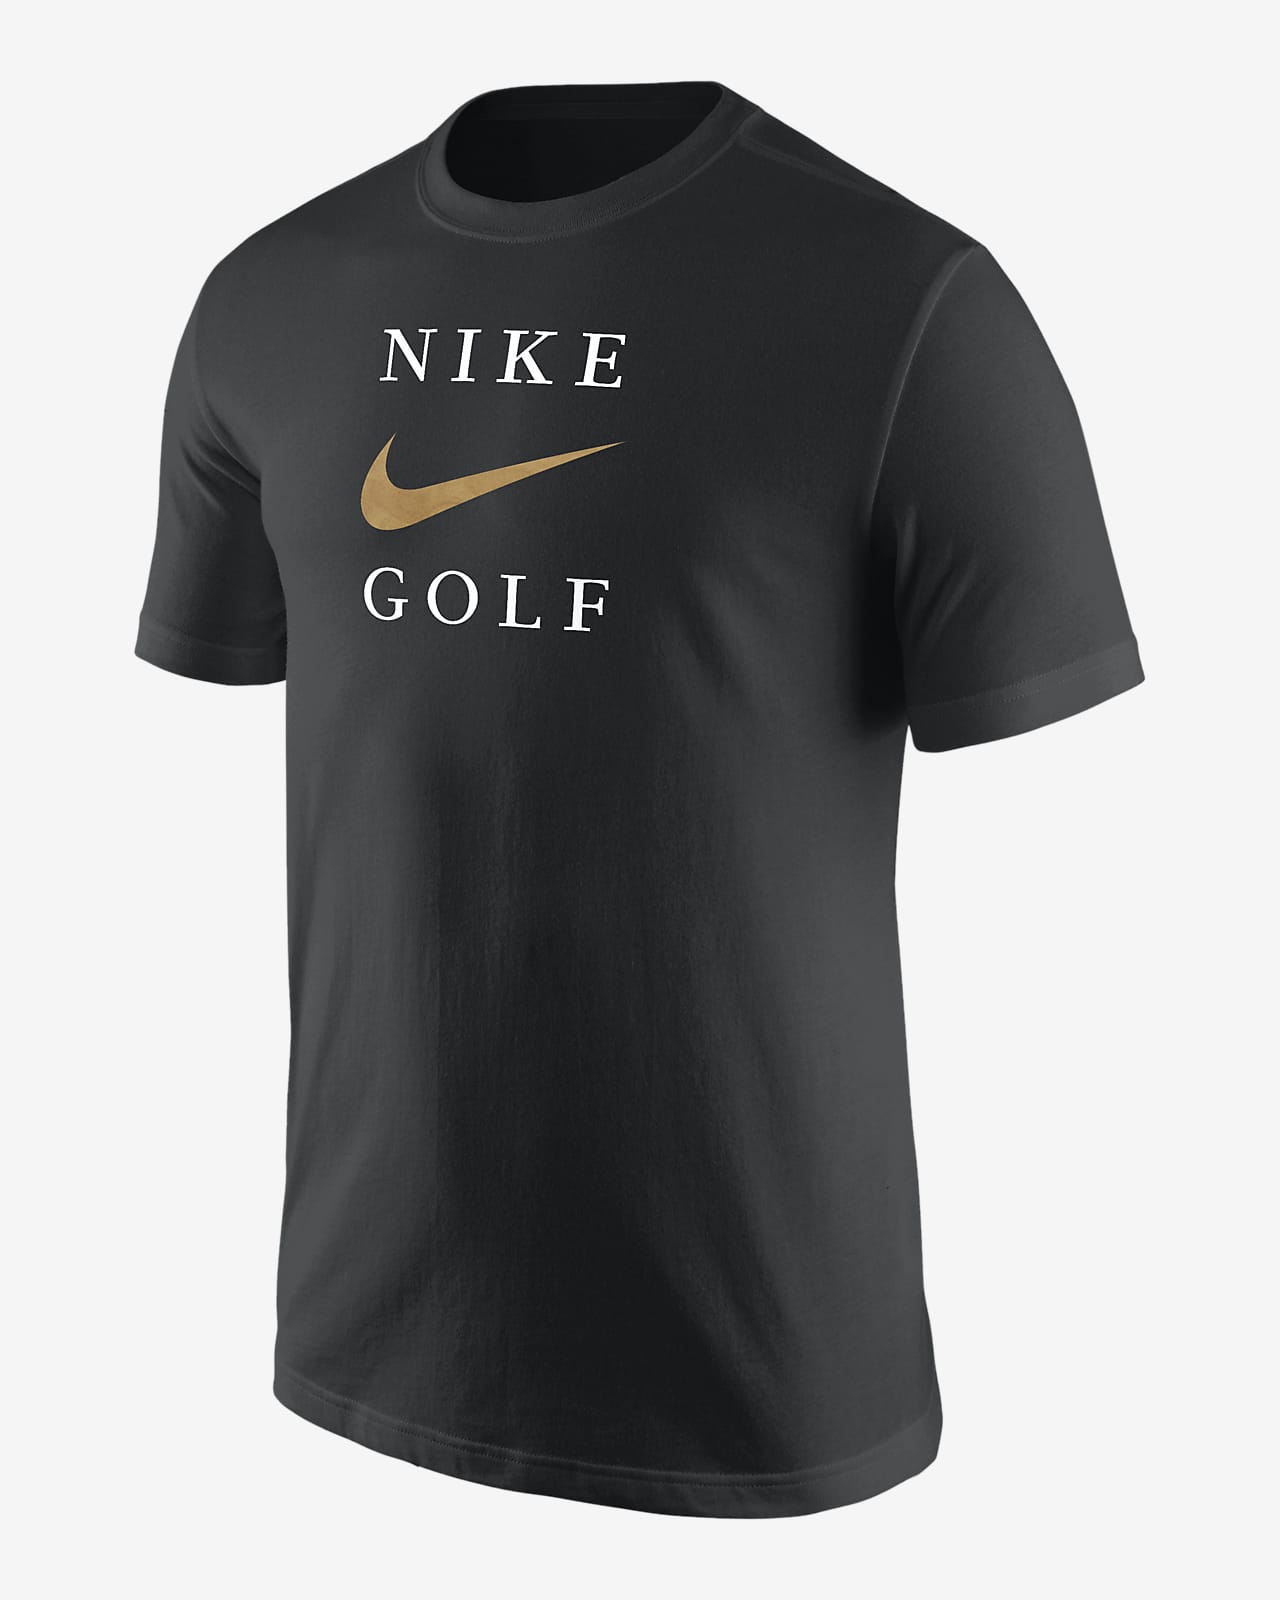 Playera para hombre Nike Golf